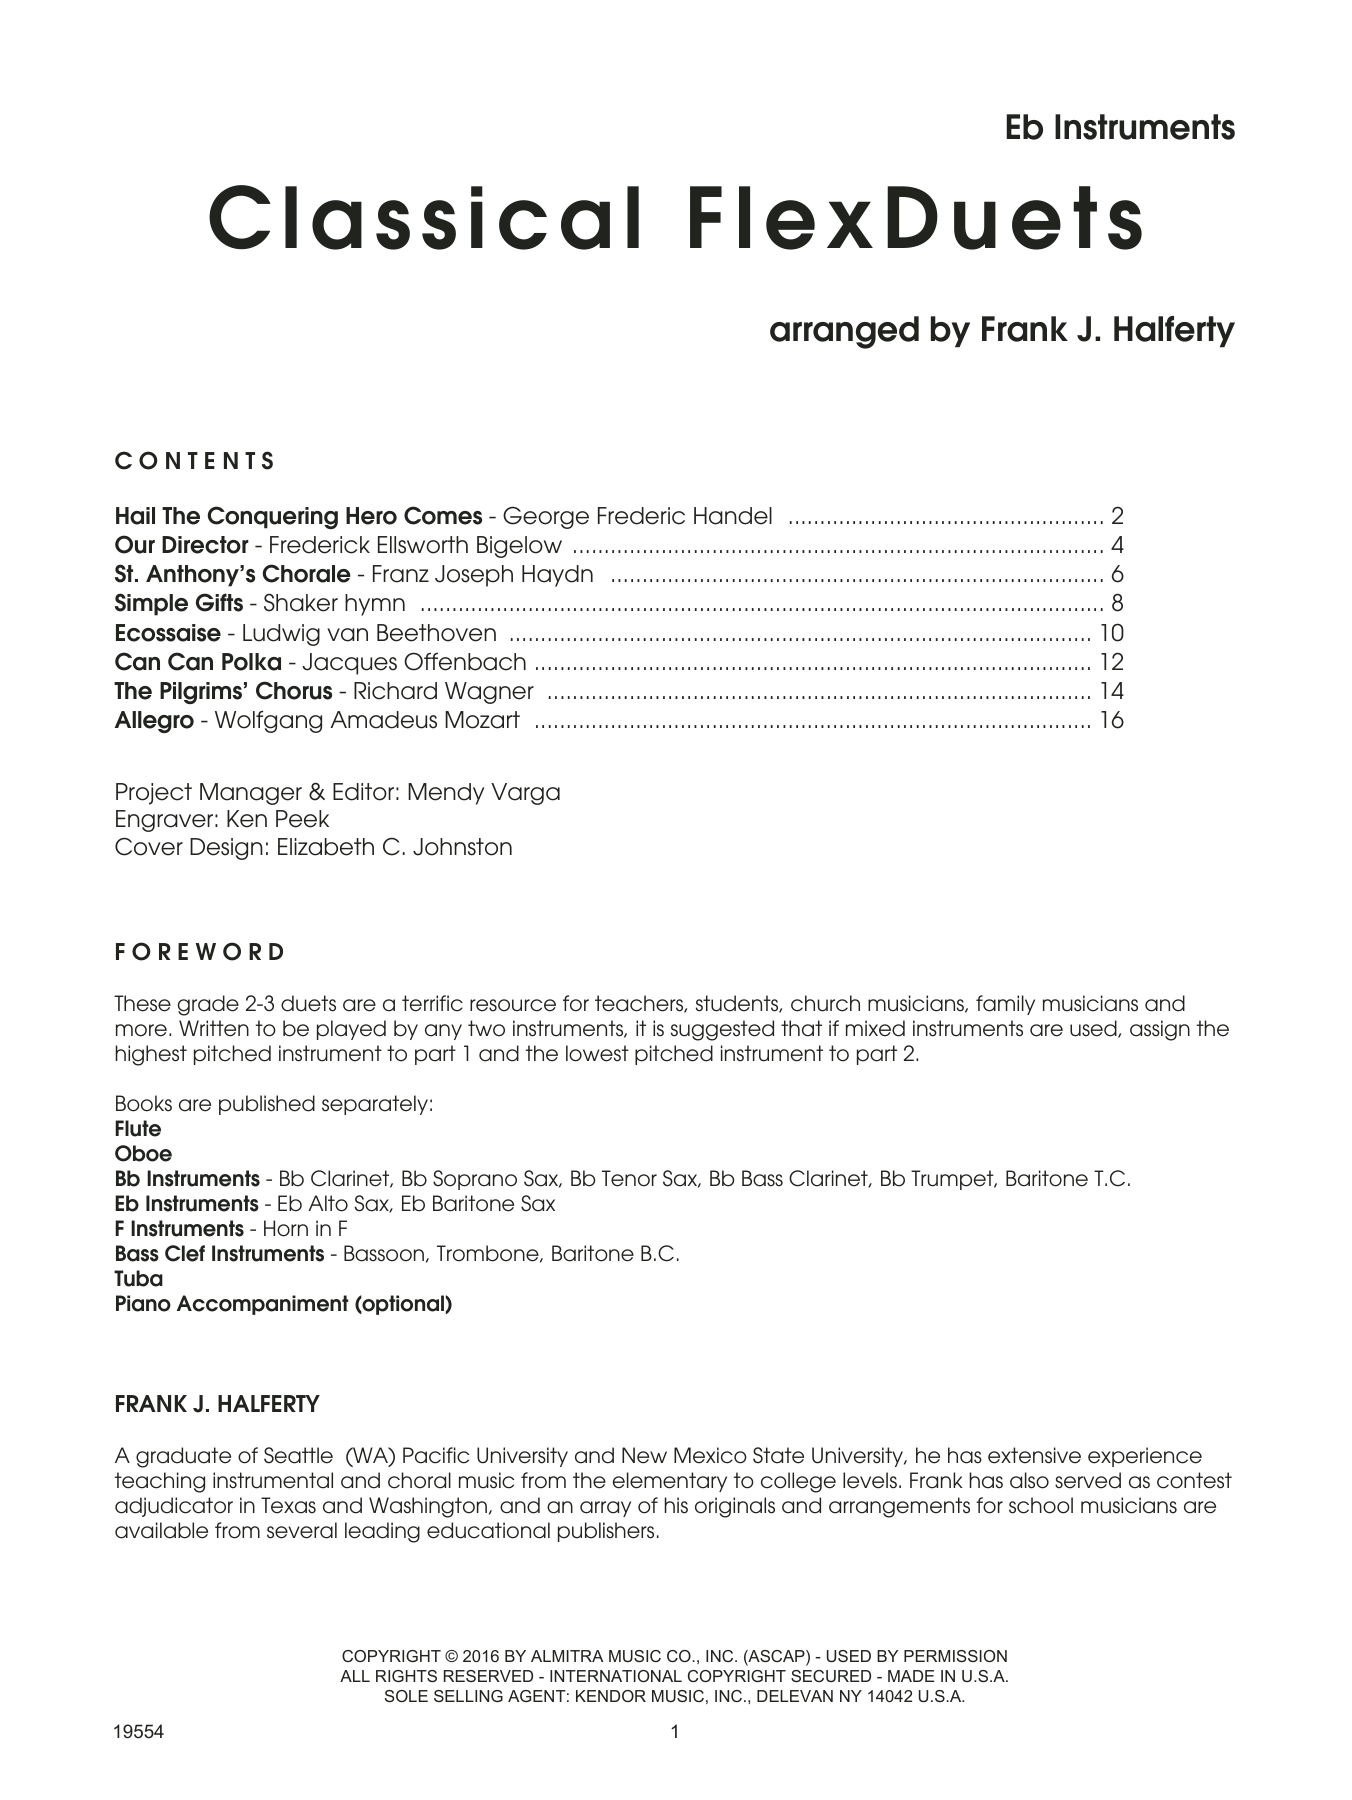 Download Frank J. Halferty Classical FlexDuts - Eb Instruments Sheet Music